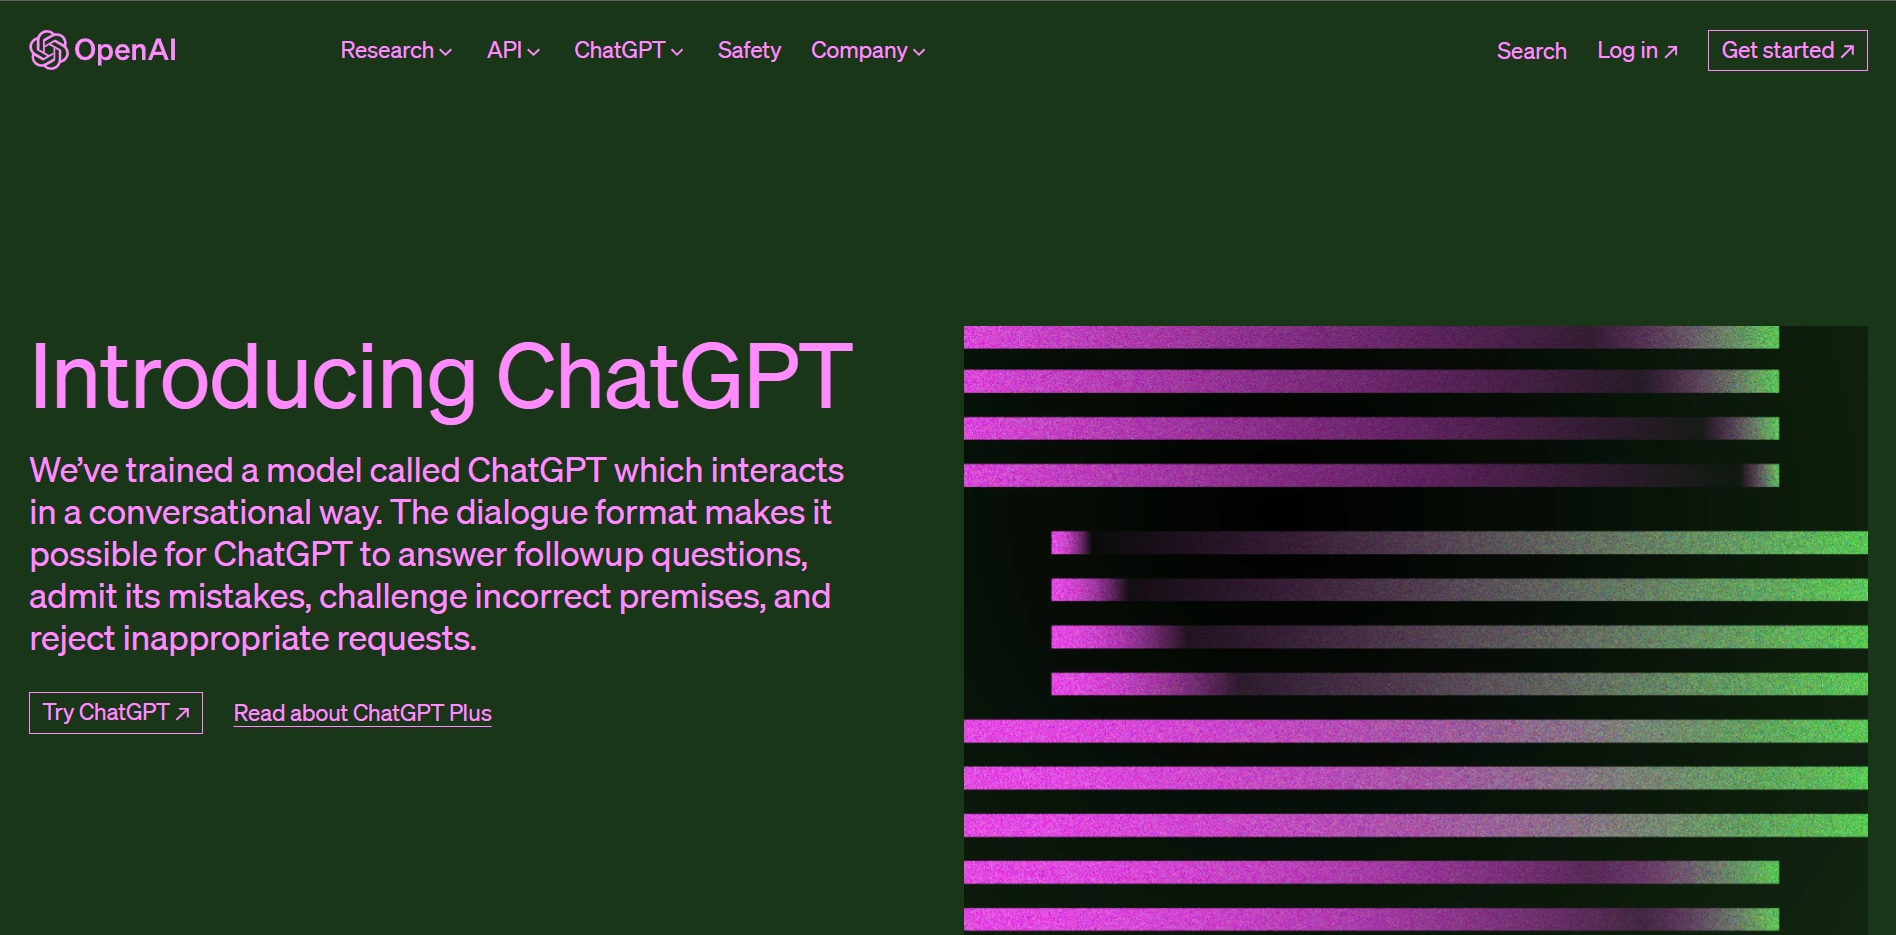 OpenAI home screen introducing chatGPT